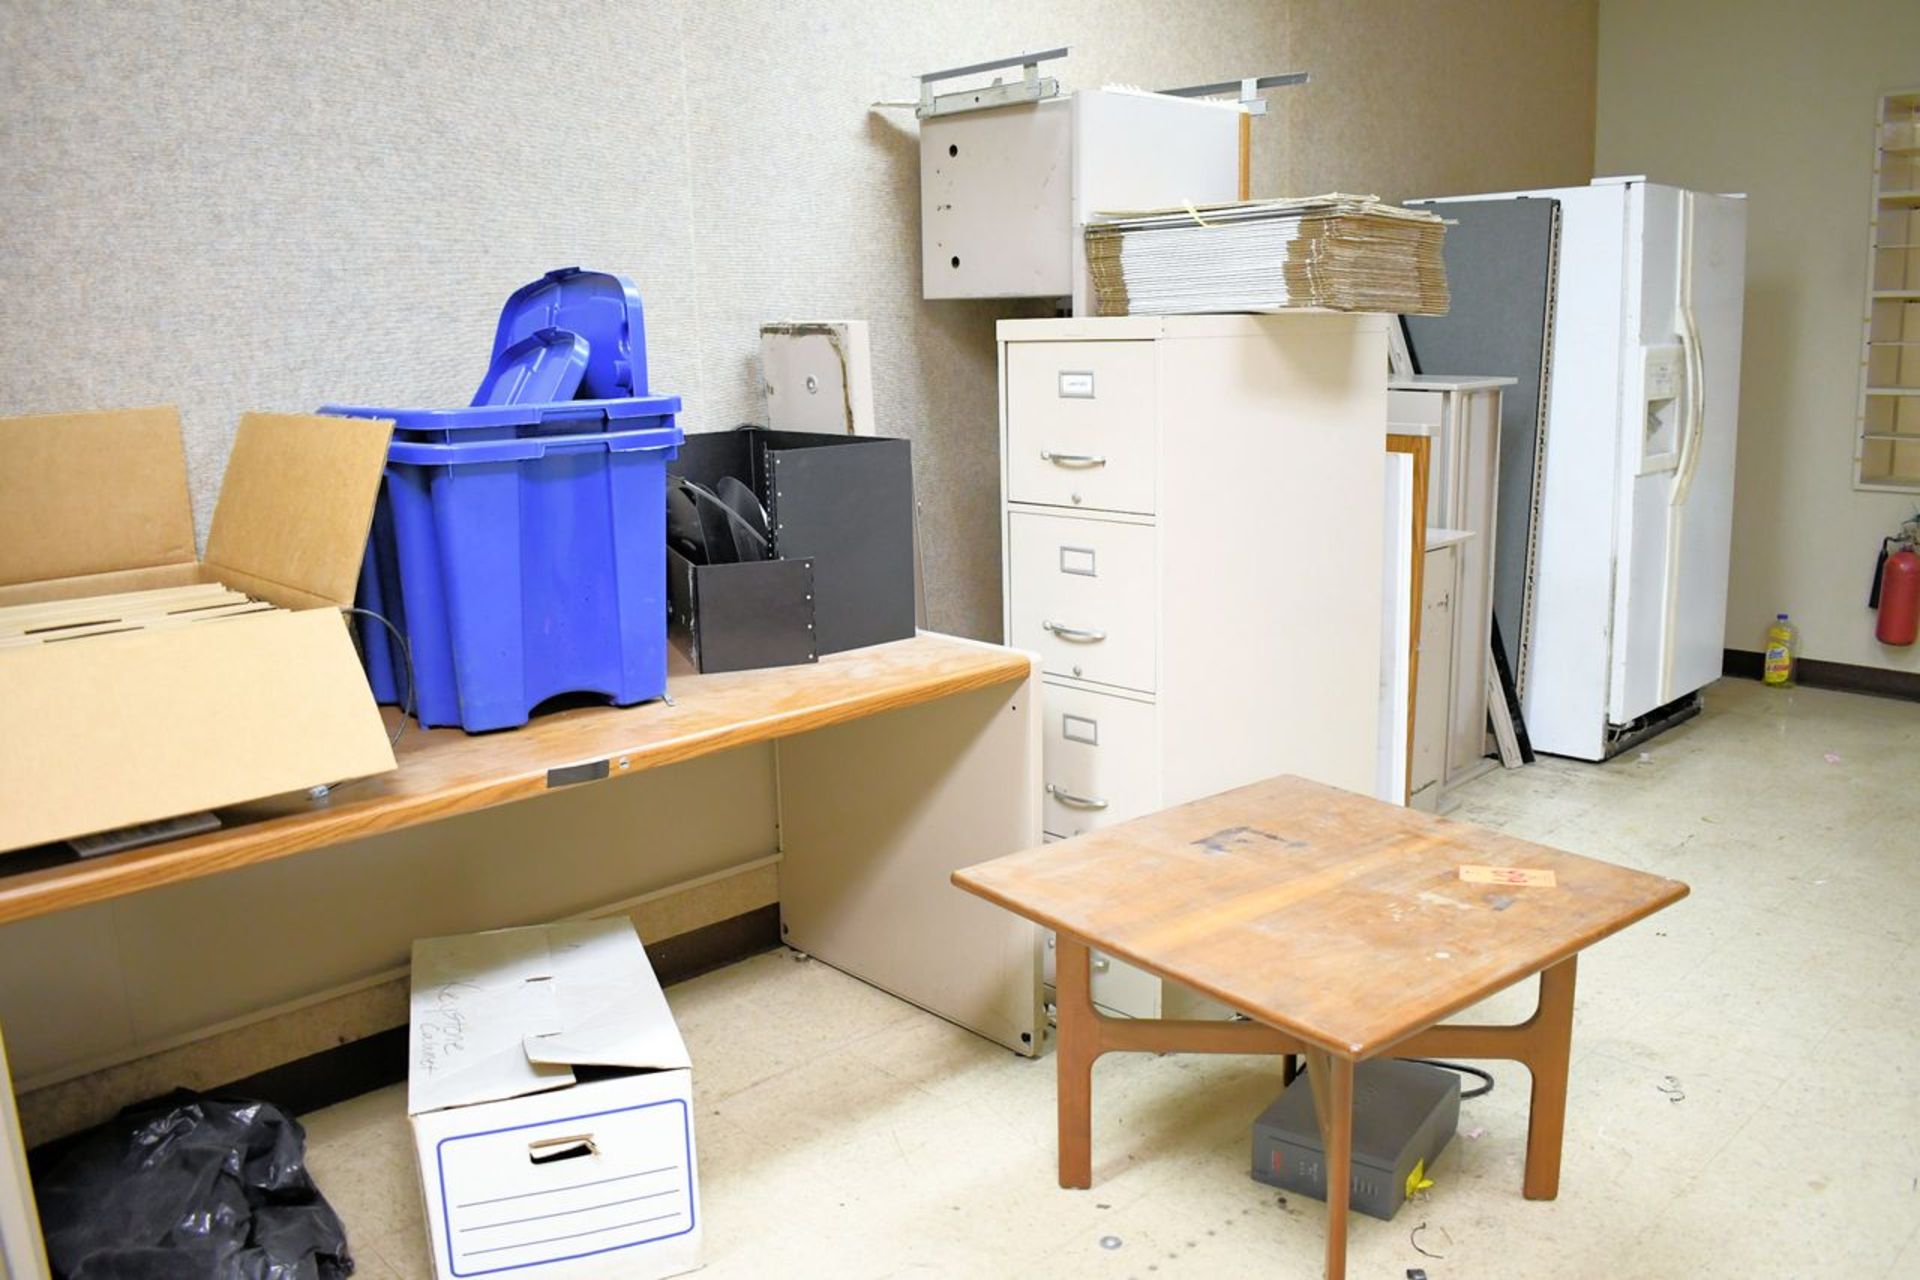 Lot - (2) Desks, (2) Tables, (1) File Cabinet, (1) 2-Door Cabinet, (1) Refrigerator, and Cubicle - Image 2 of 3